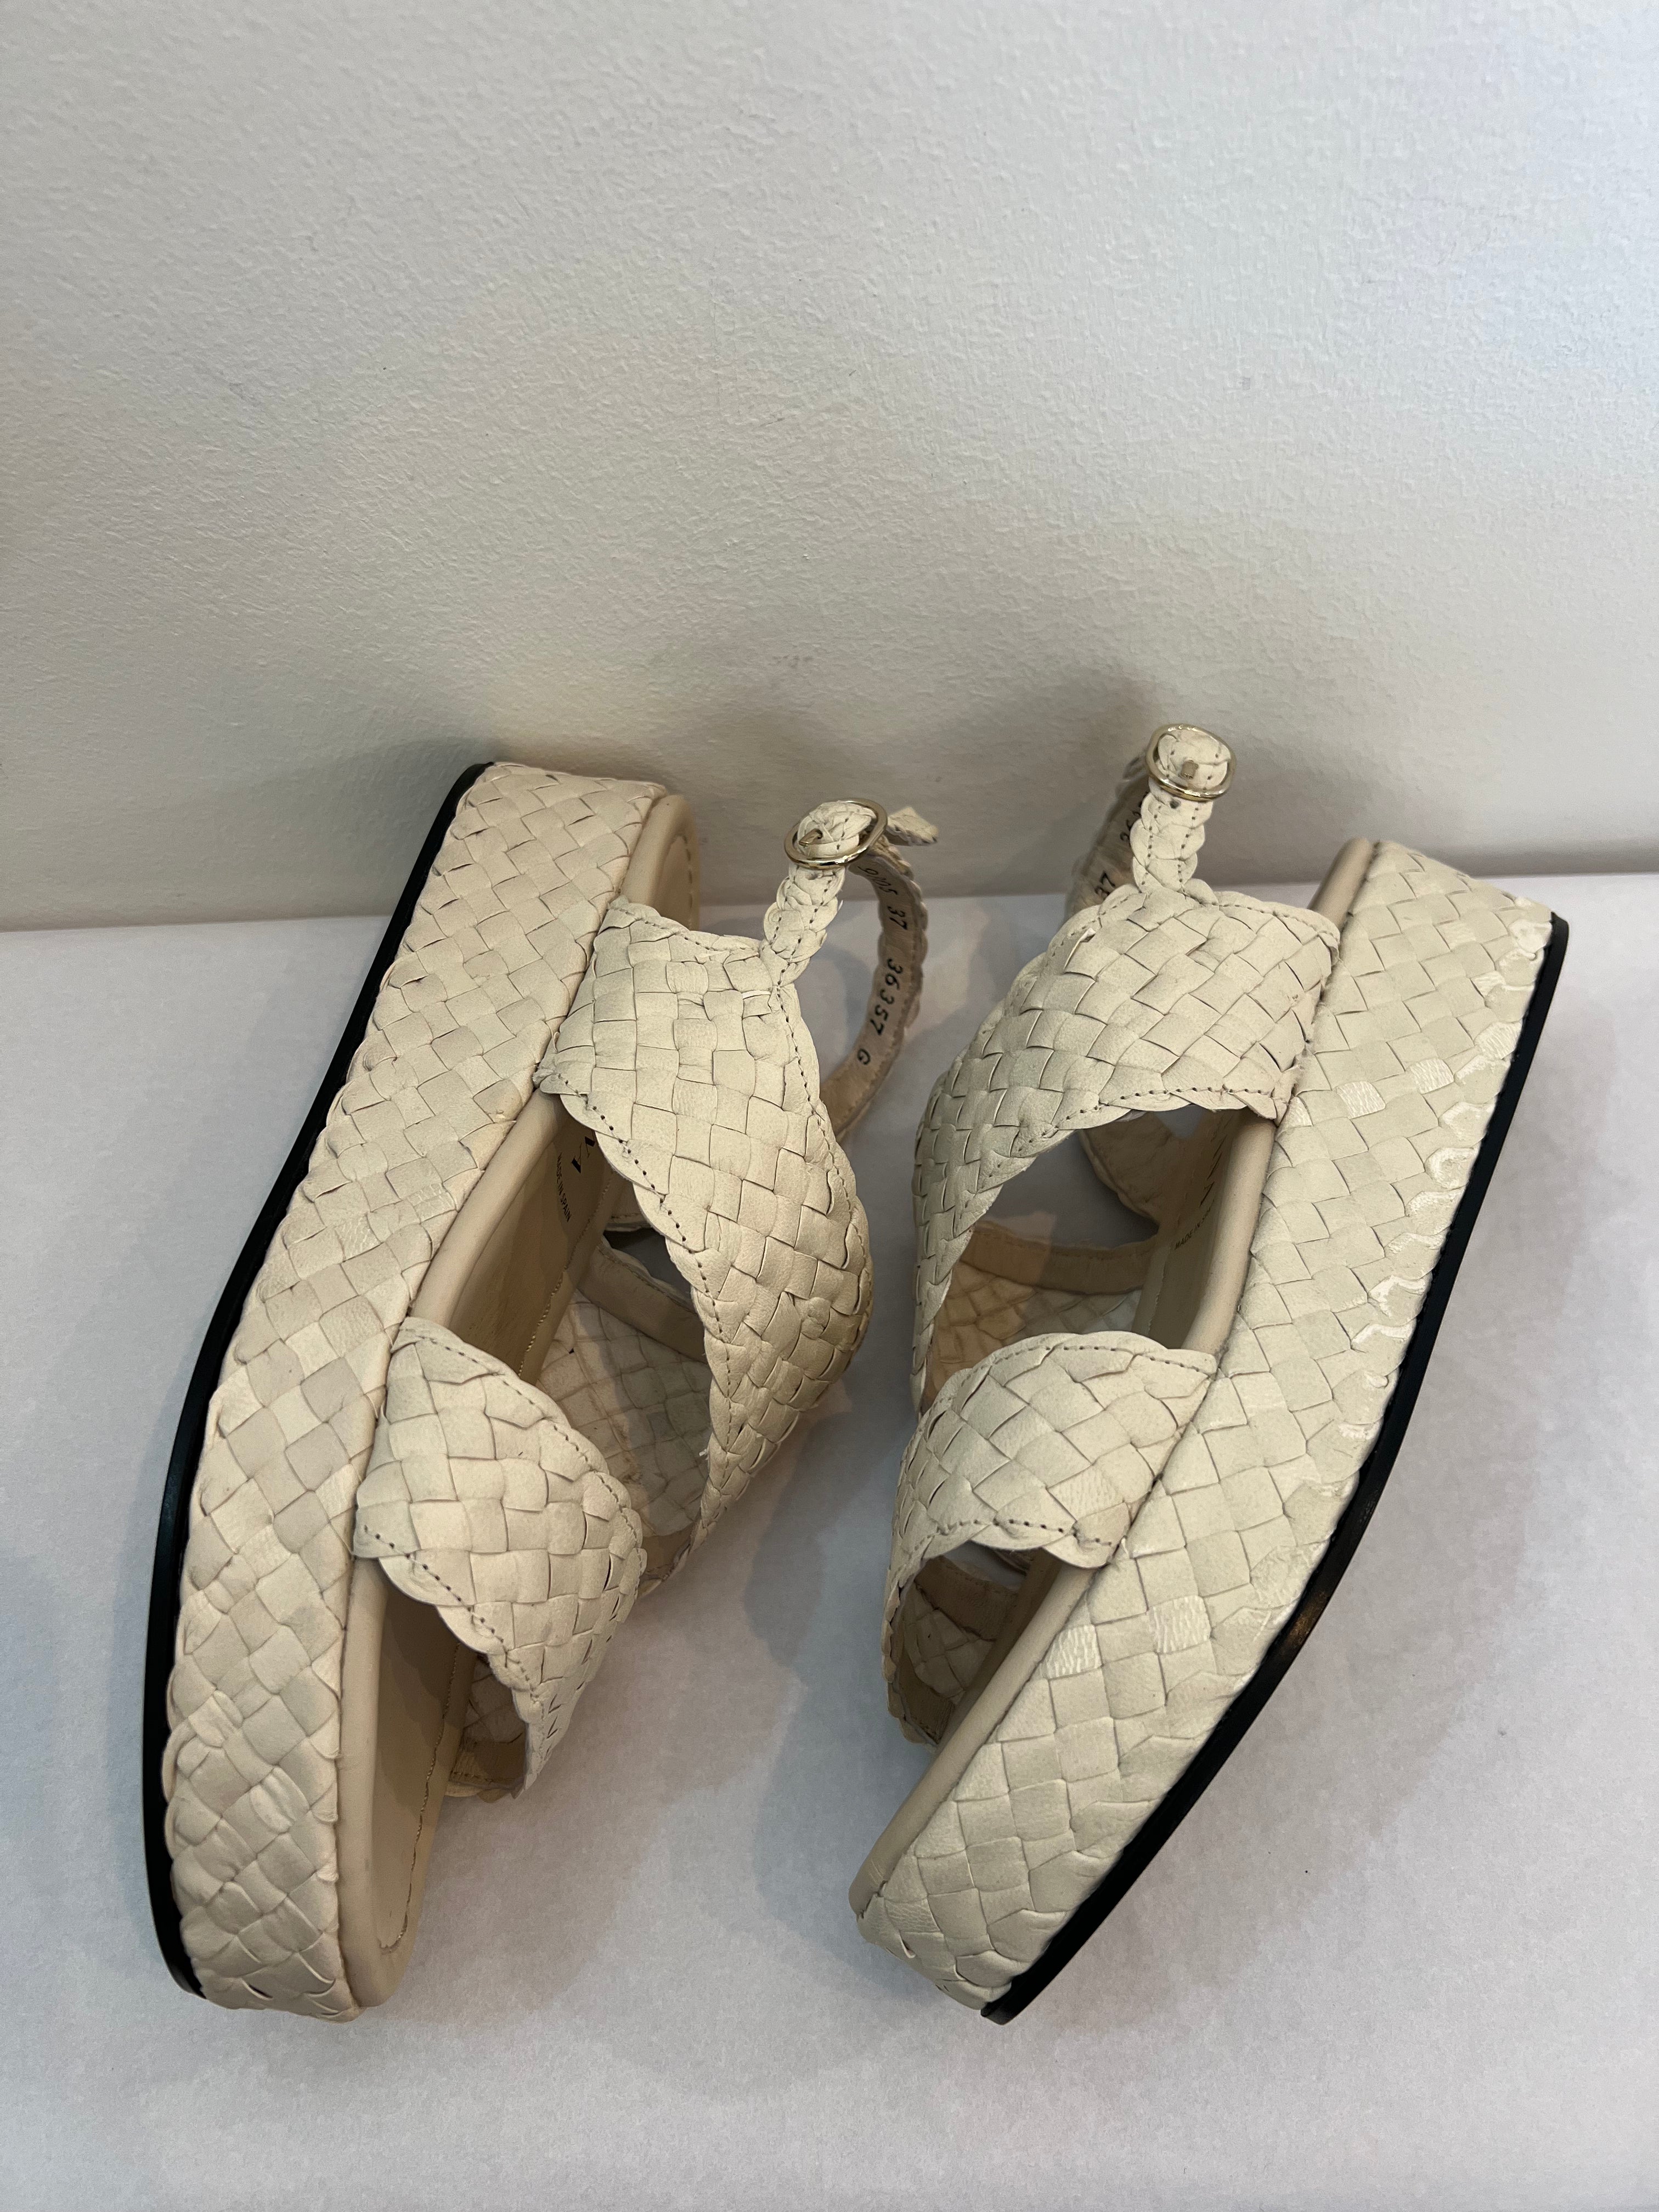 Hetre Alresford Hampshire Shoe Store Pons Quintana Stone Plaited Leather Wedge